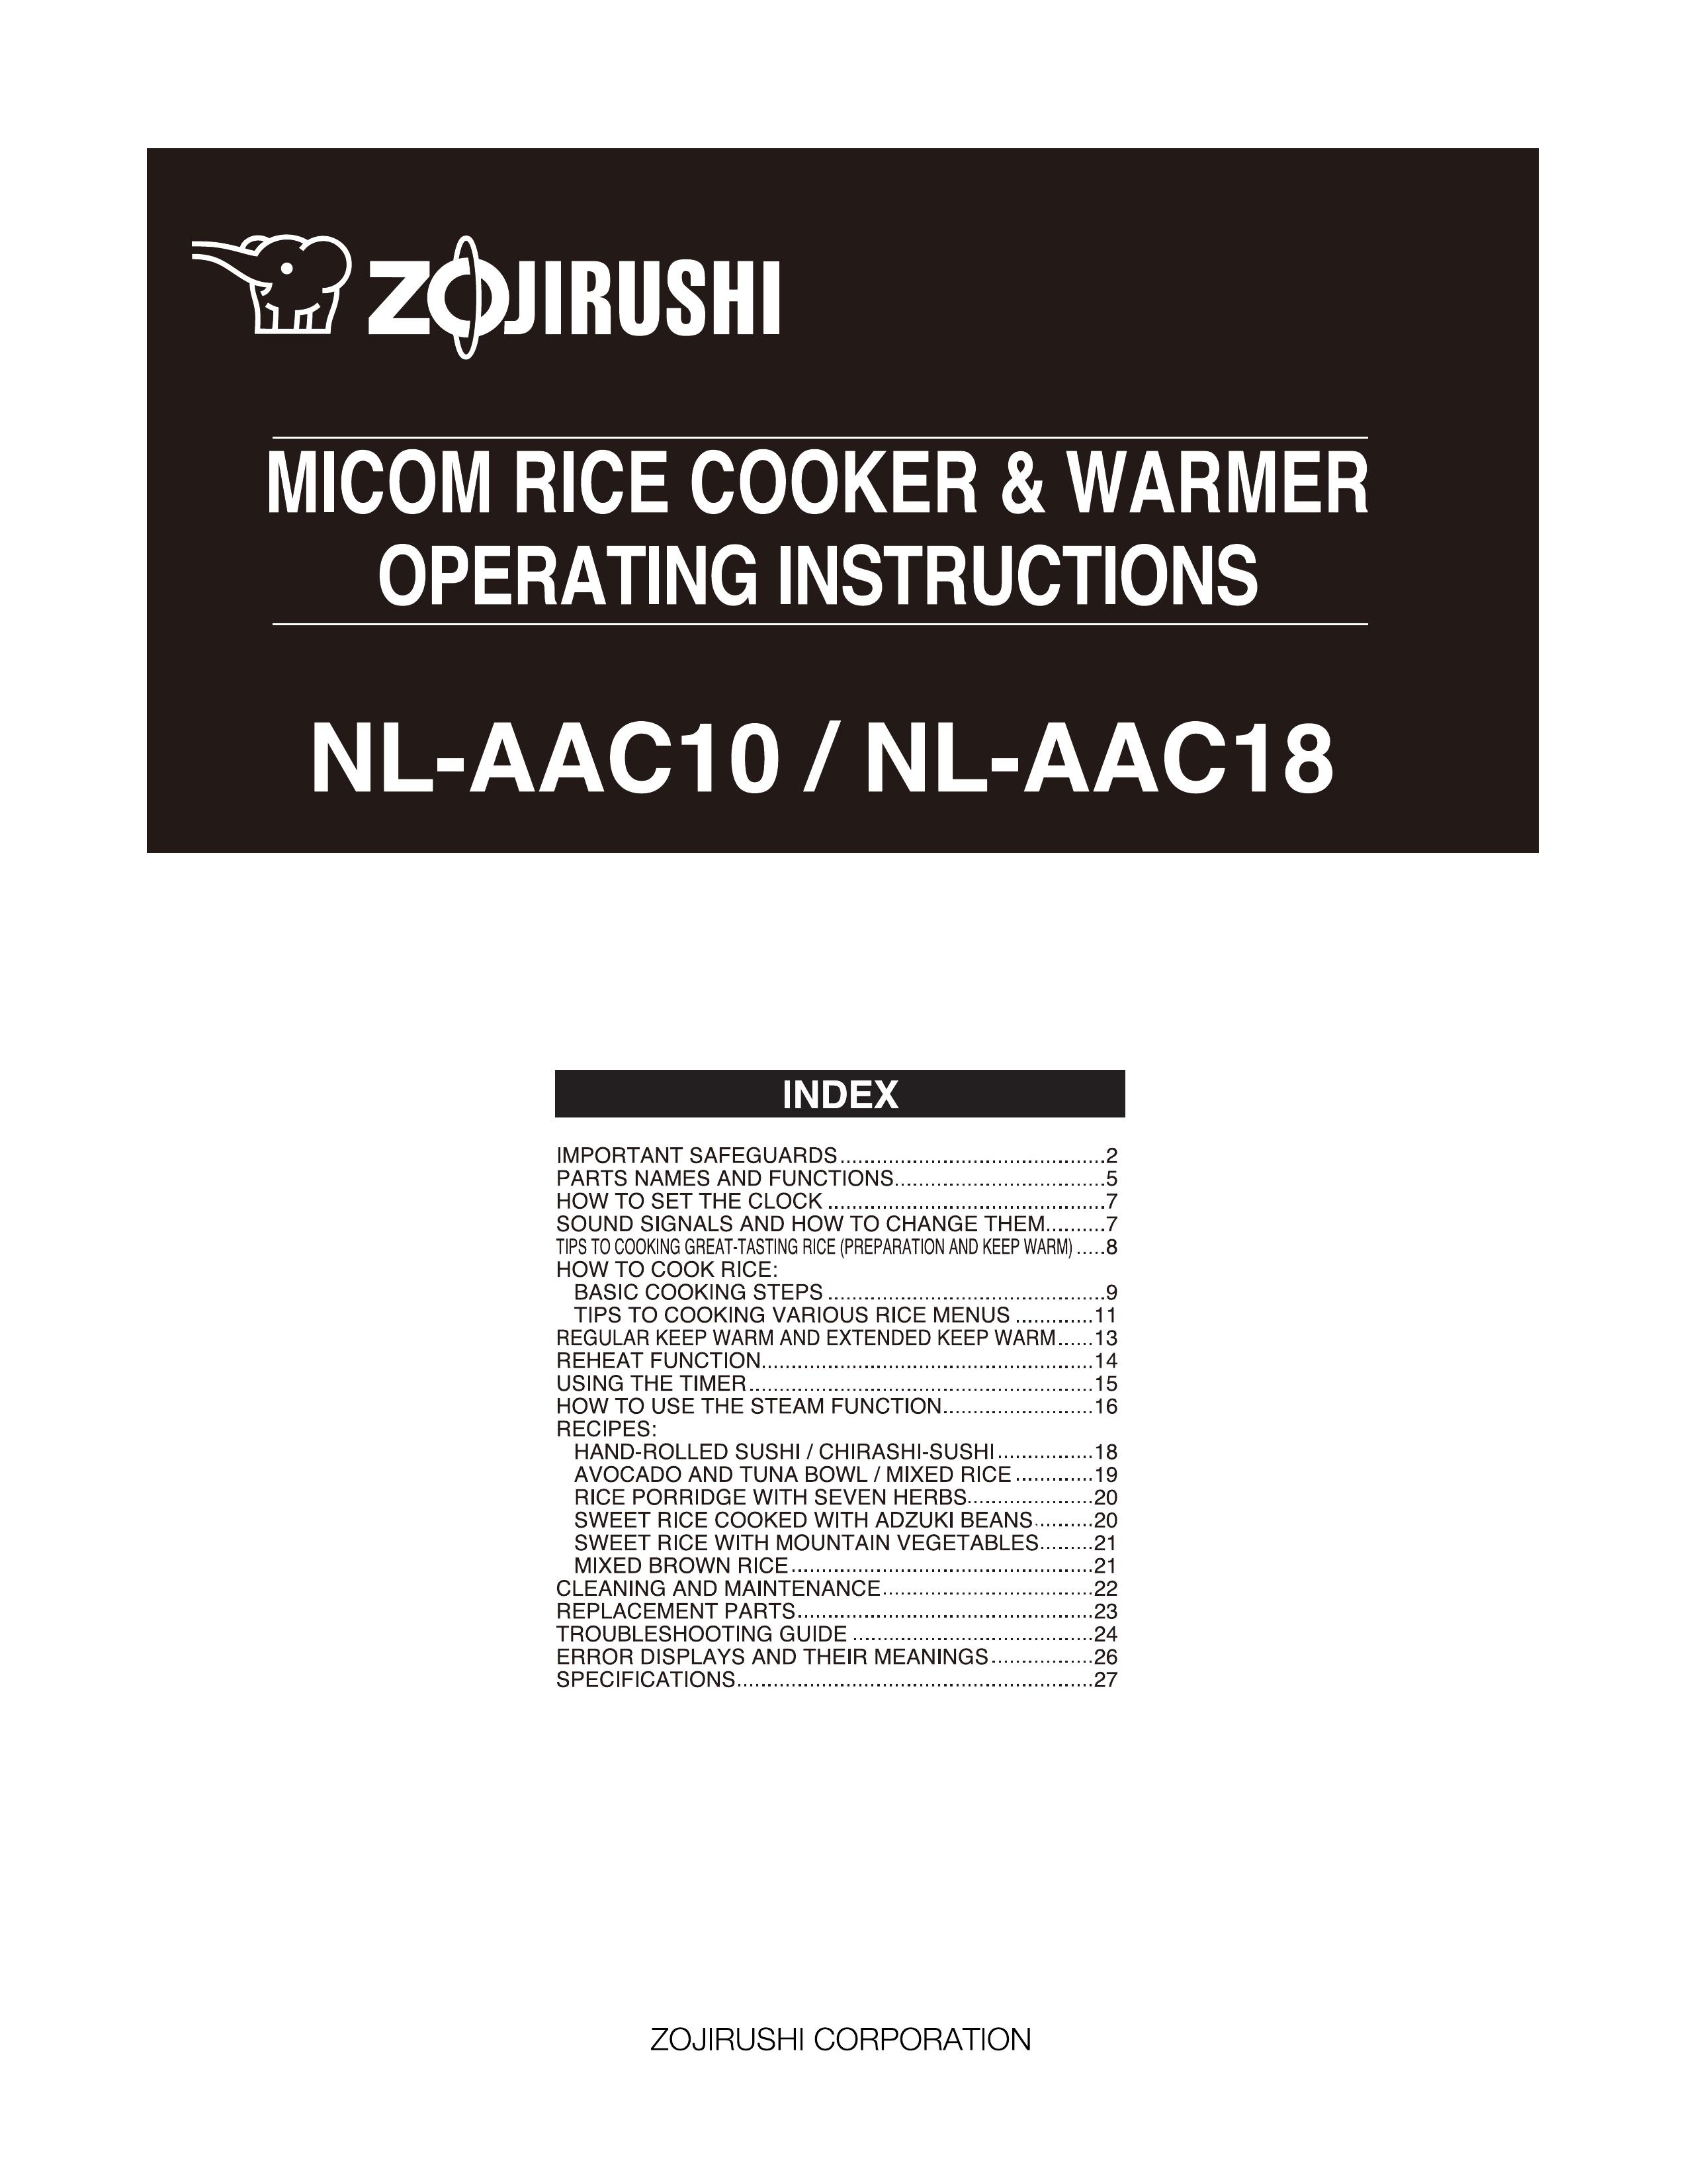 Zojirushi NL-AAC18 Rice Cooker User Manual